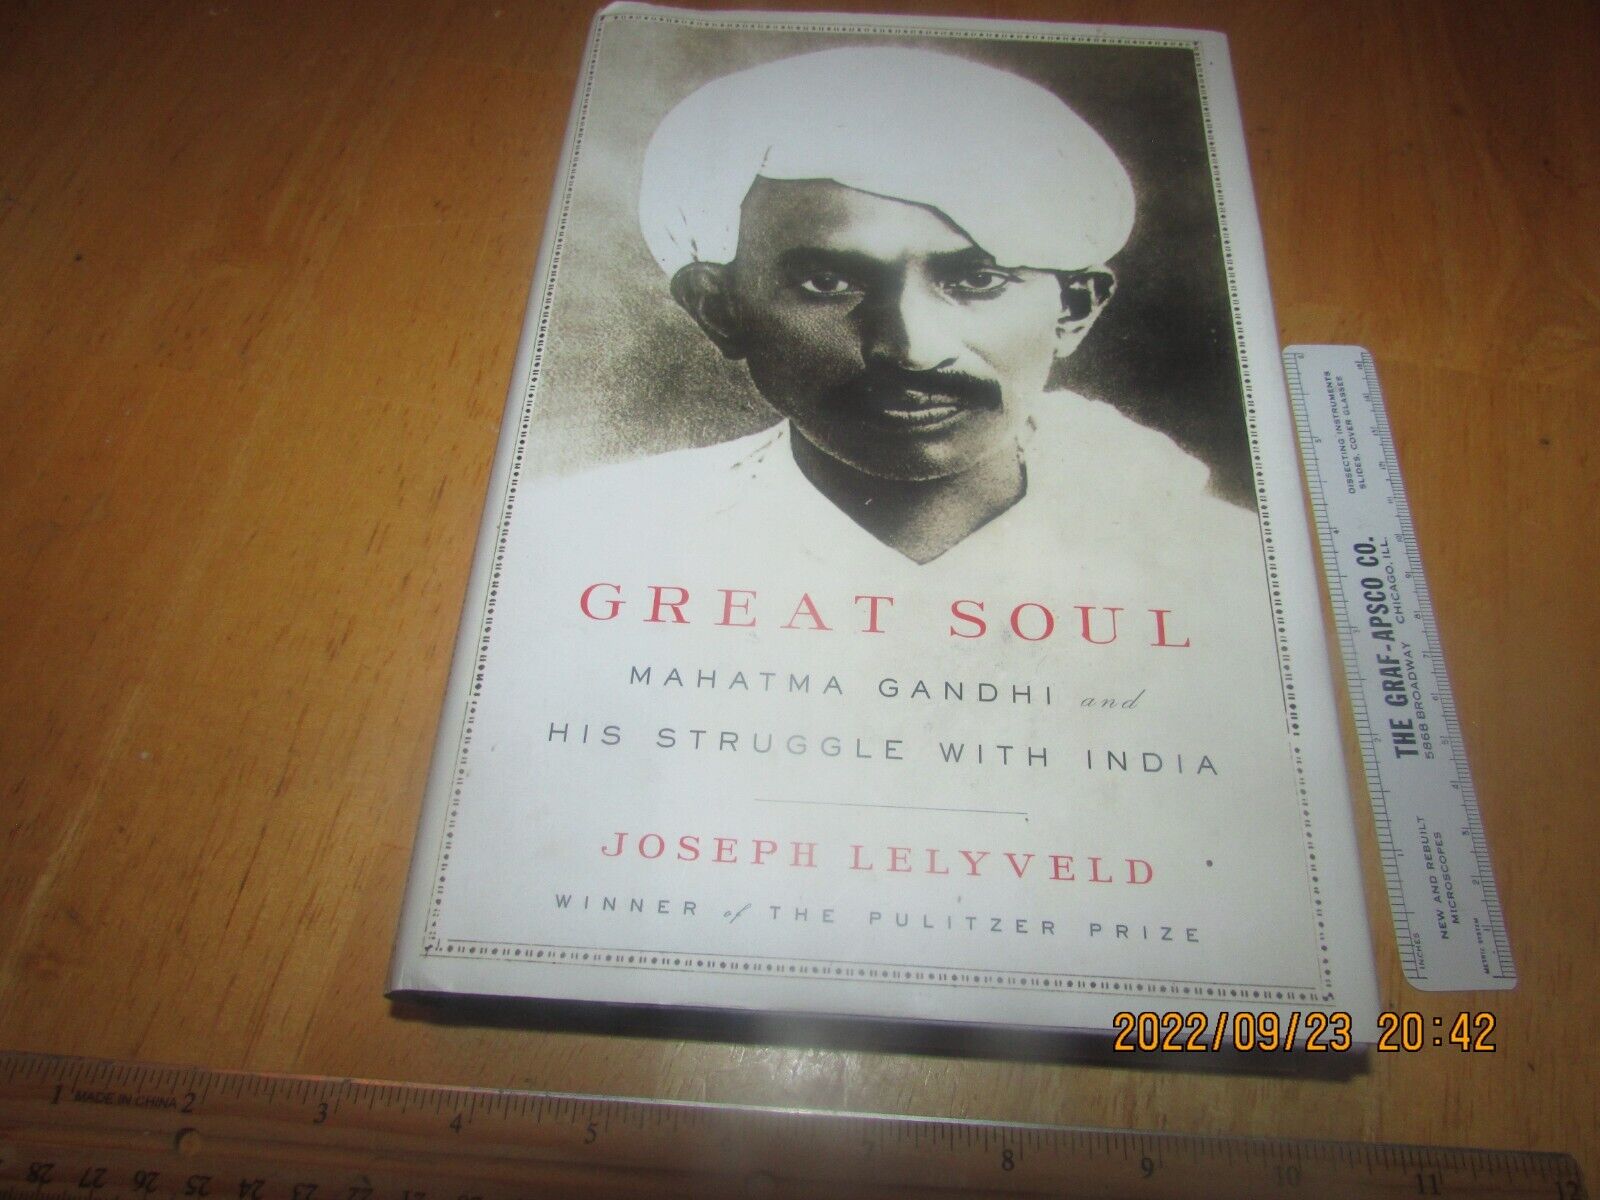 Great soul mahatma gandhi and his struggle with india by joseph lelyveld